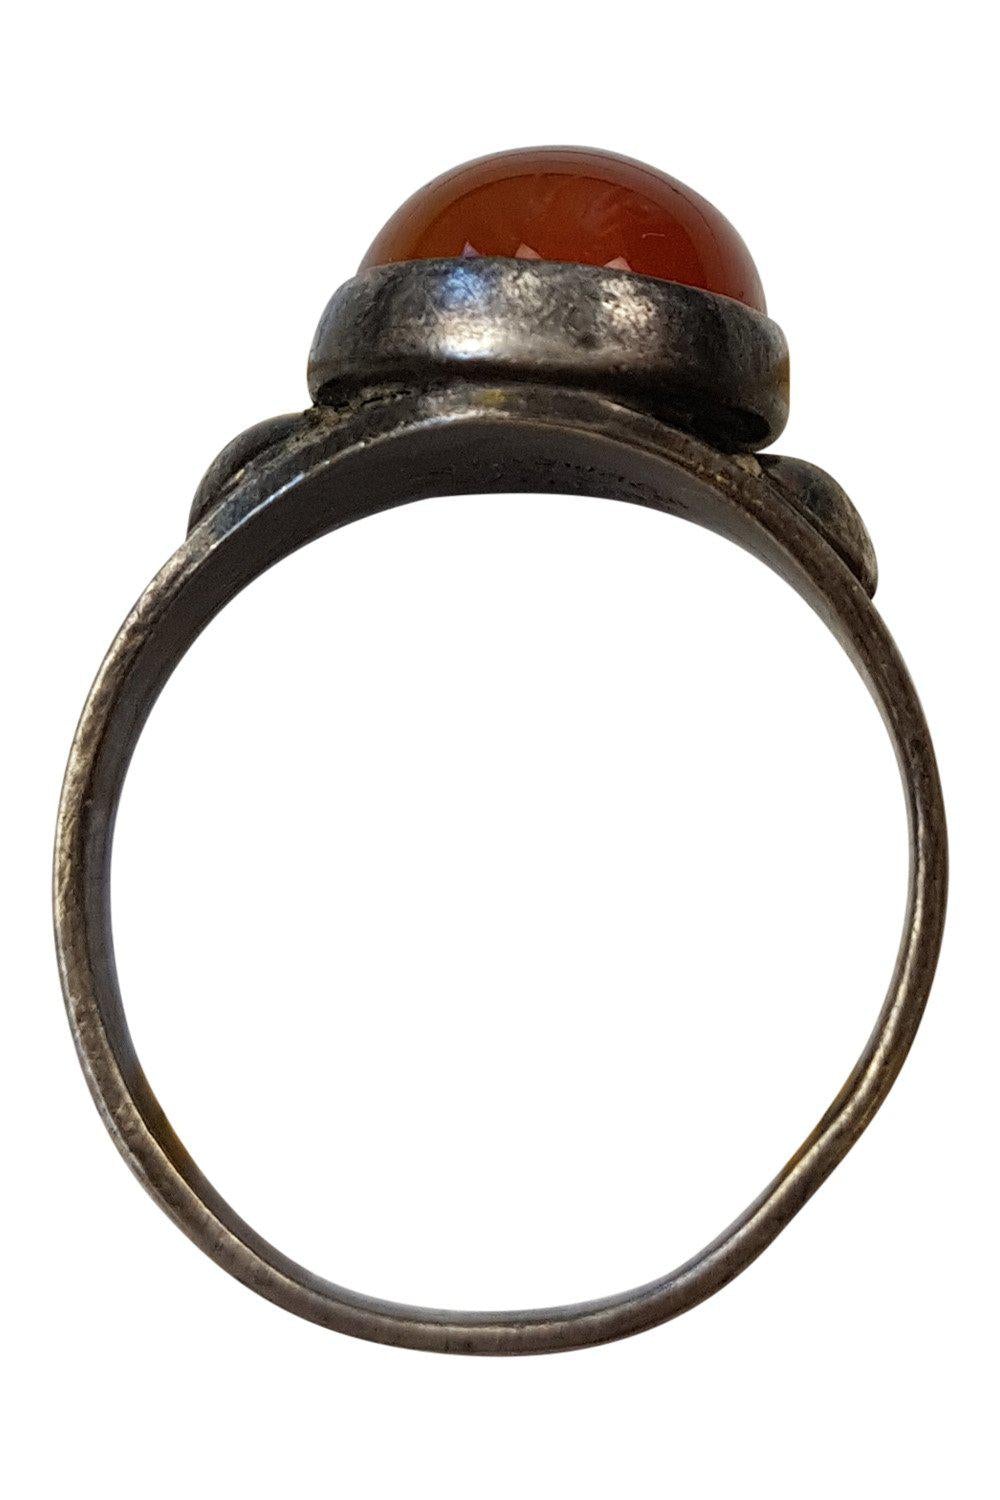 STERLING SILVER Handmade Ring Amber Glass Stone Set (K)-The Freperie